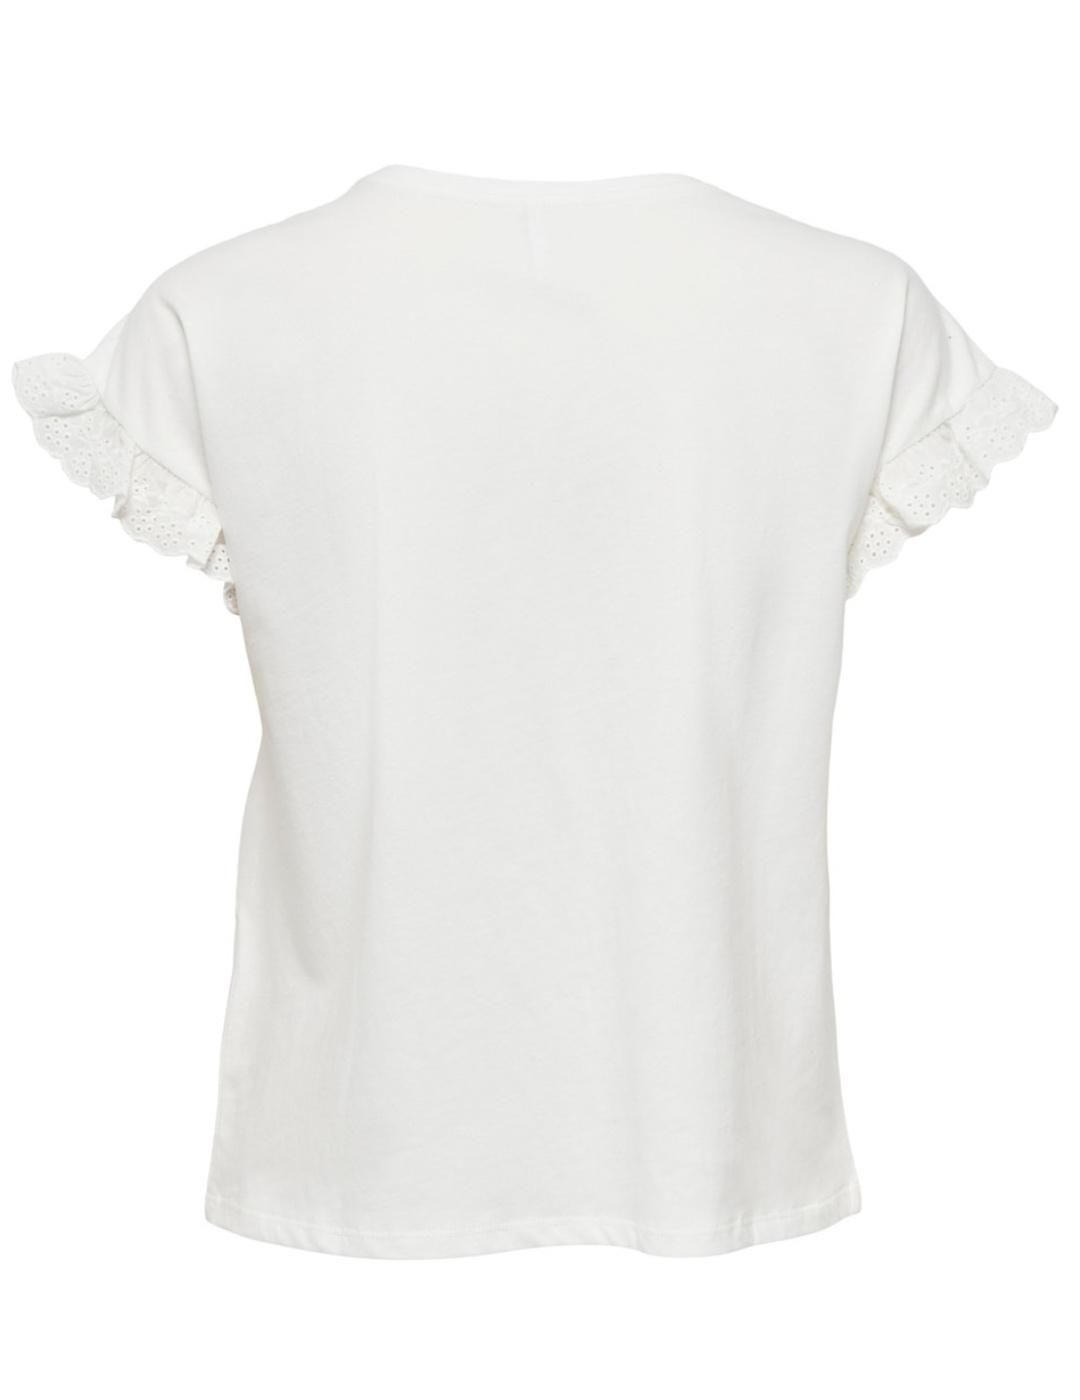 Camiseta Only Iris blanco manga corta para mujer